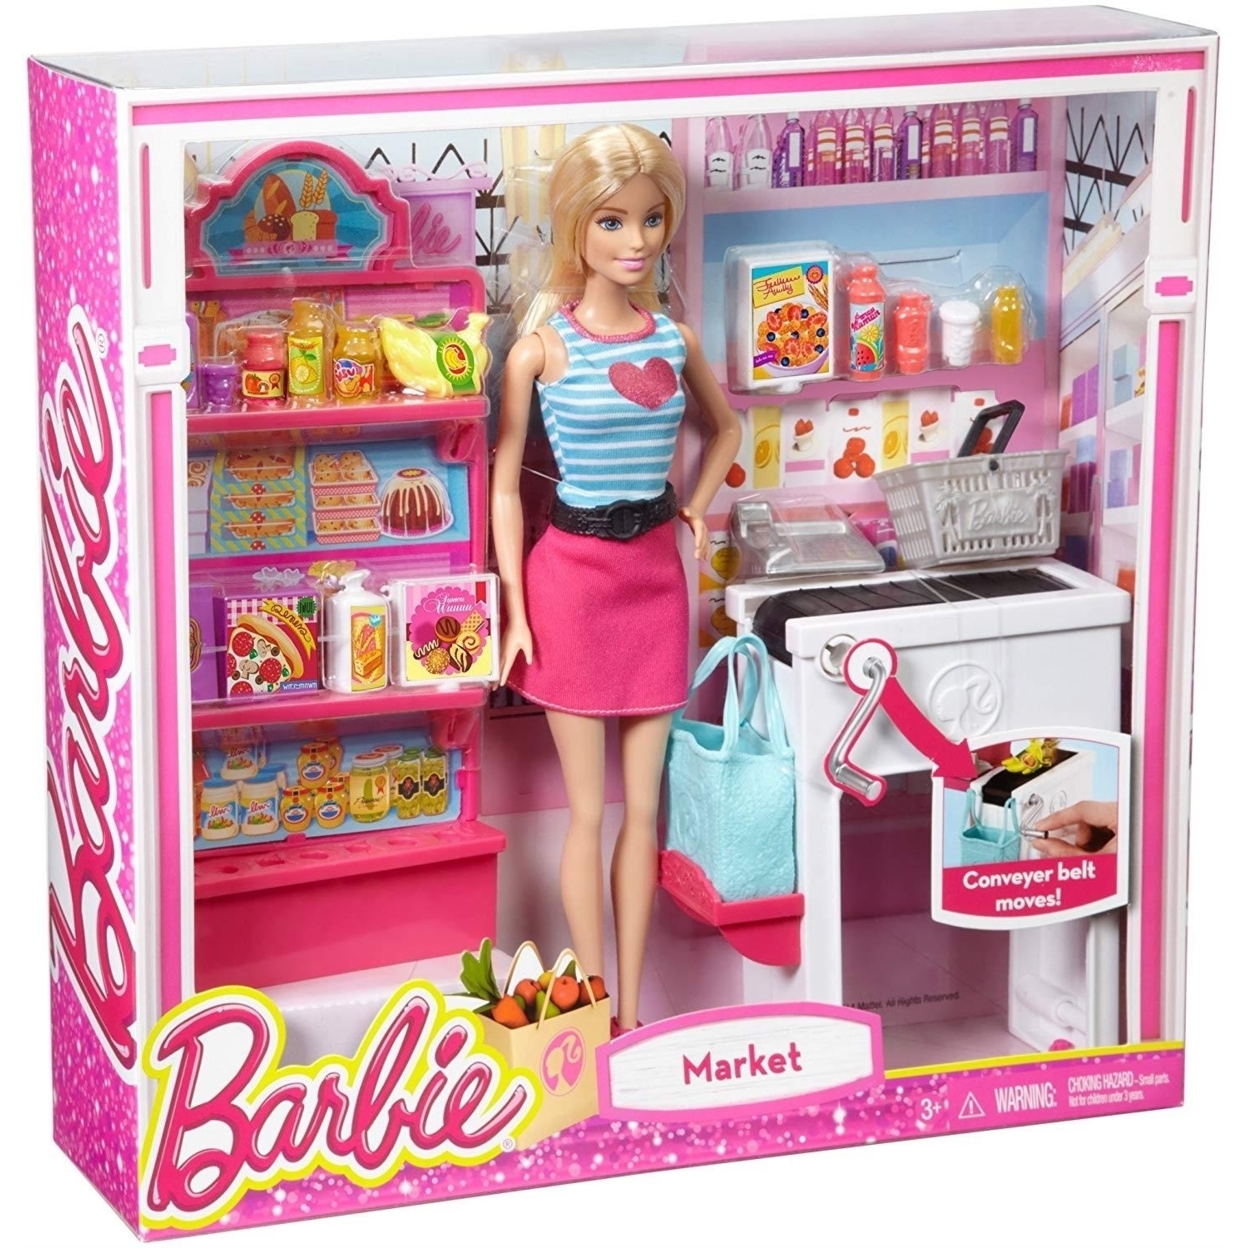 buy-barbie-malibu-ave-grocery-store-playset-mattel-doll-figure-market